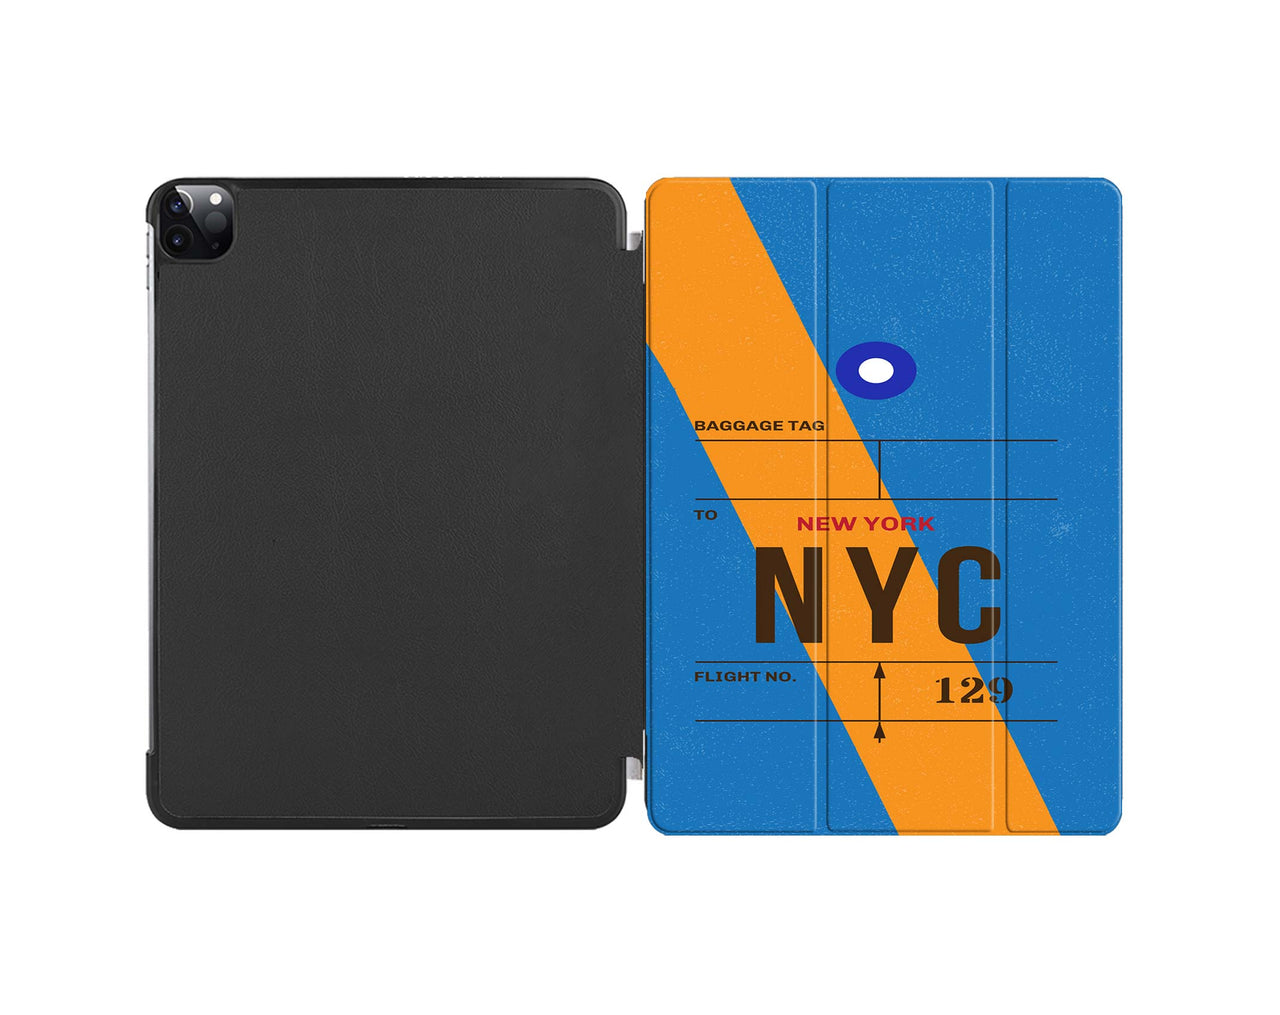 NYC - New York Luggage Tag Designed iPad Cases